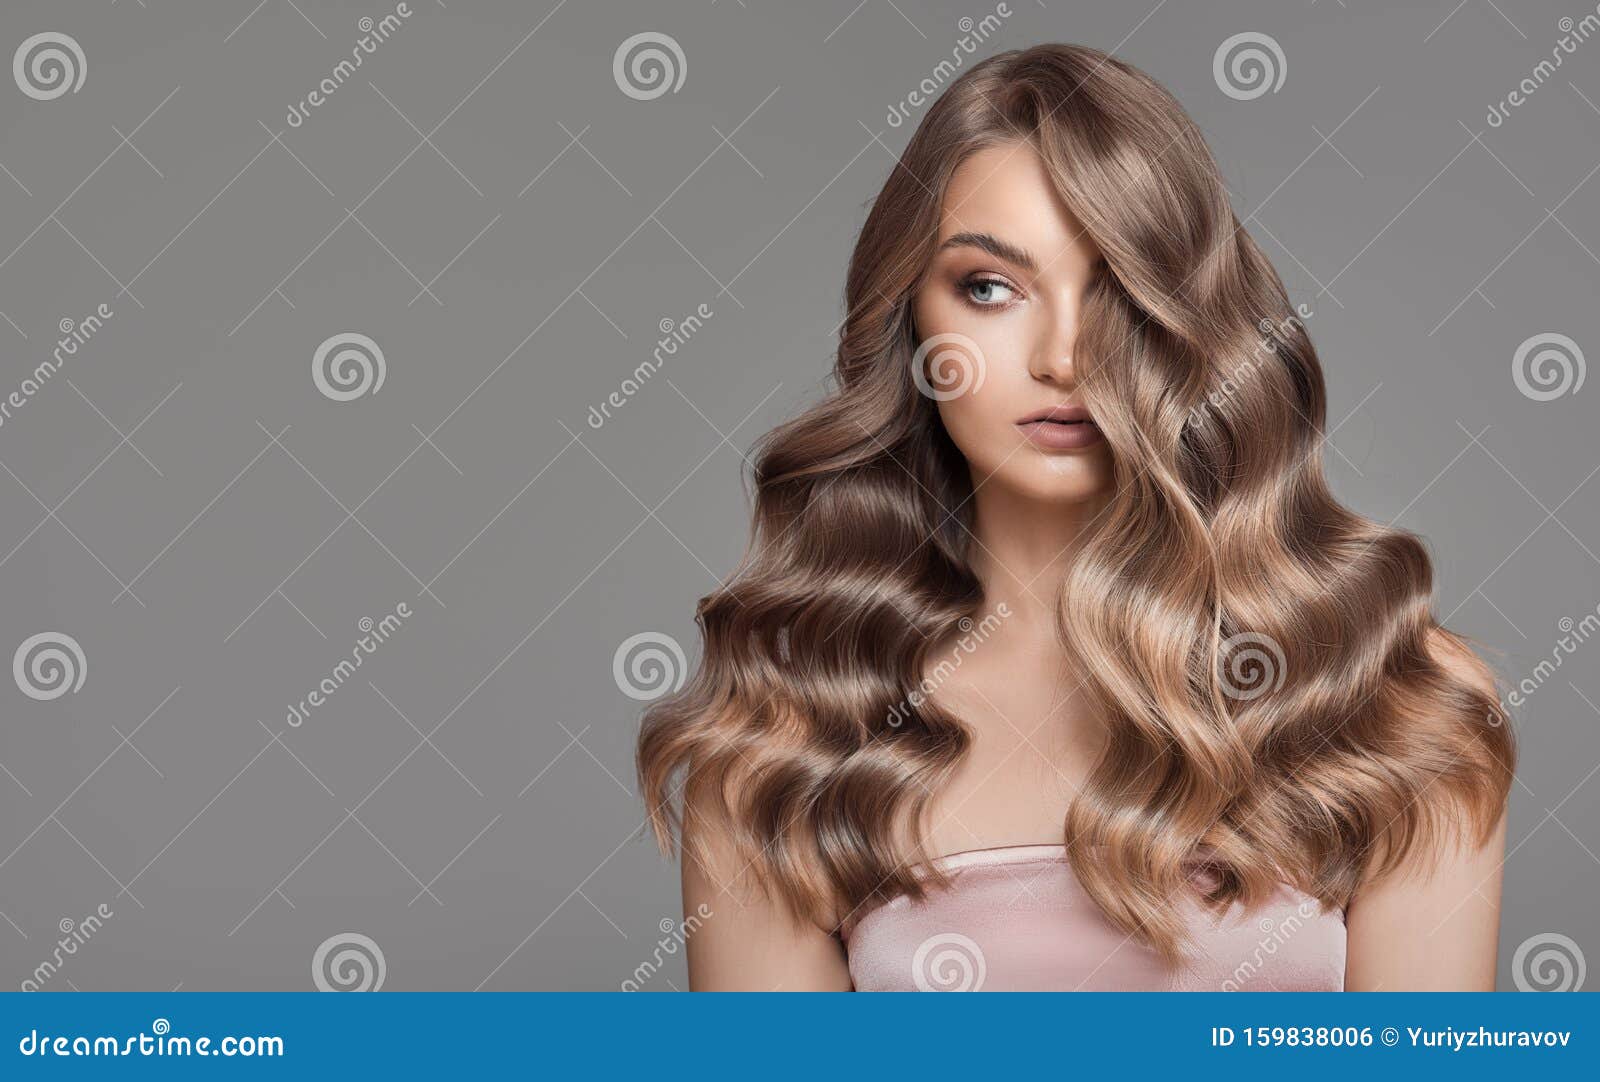 woman with beautiful natural long wavy blonde hair